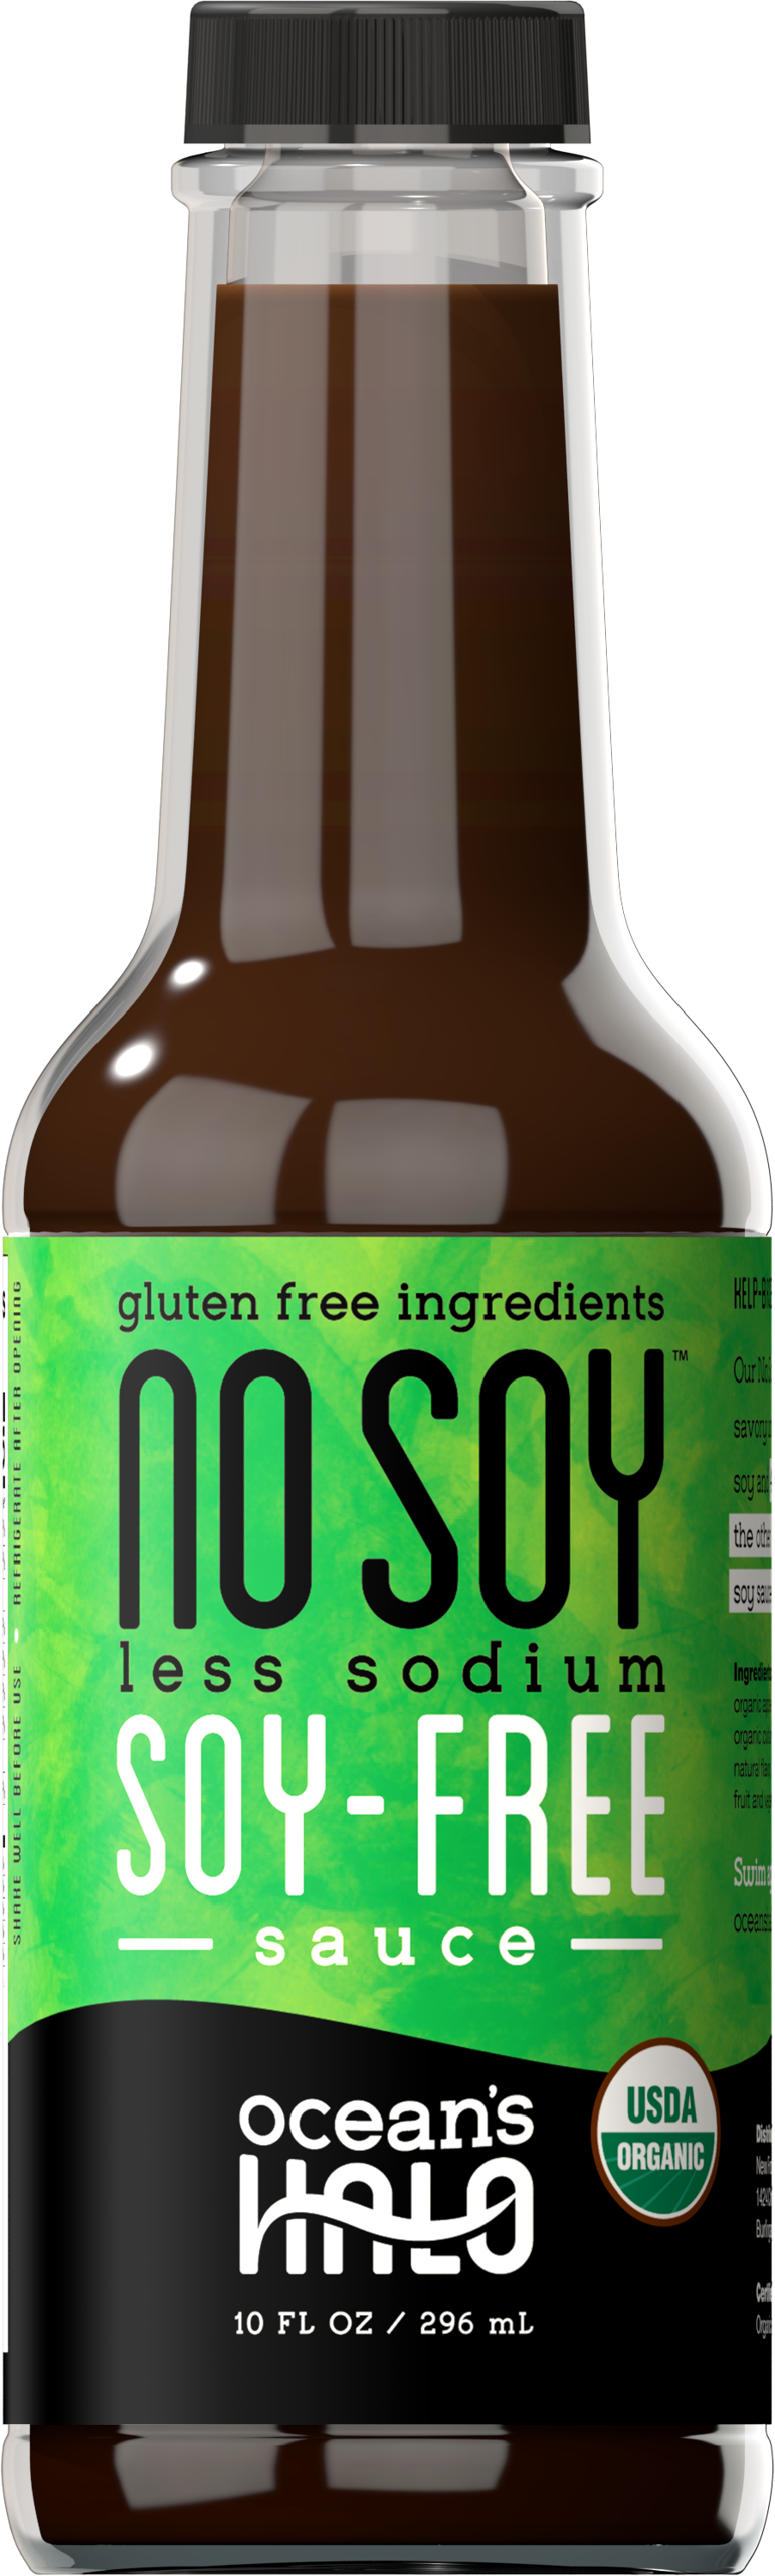 Organic No Soy Sauce Less Sodium